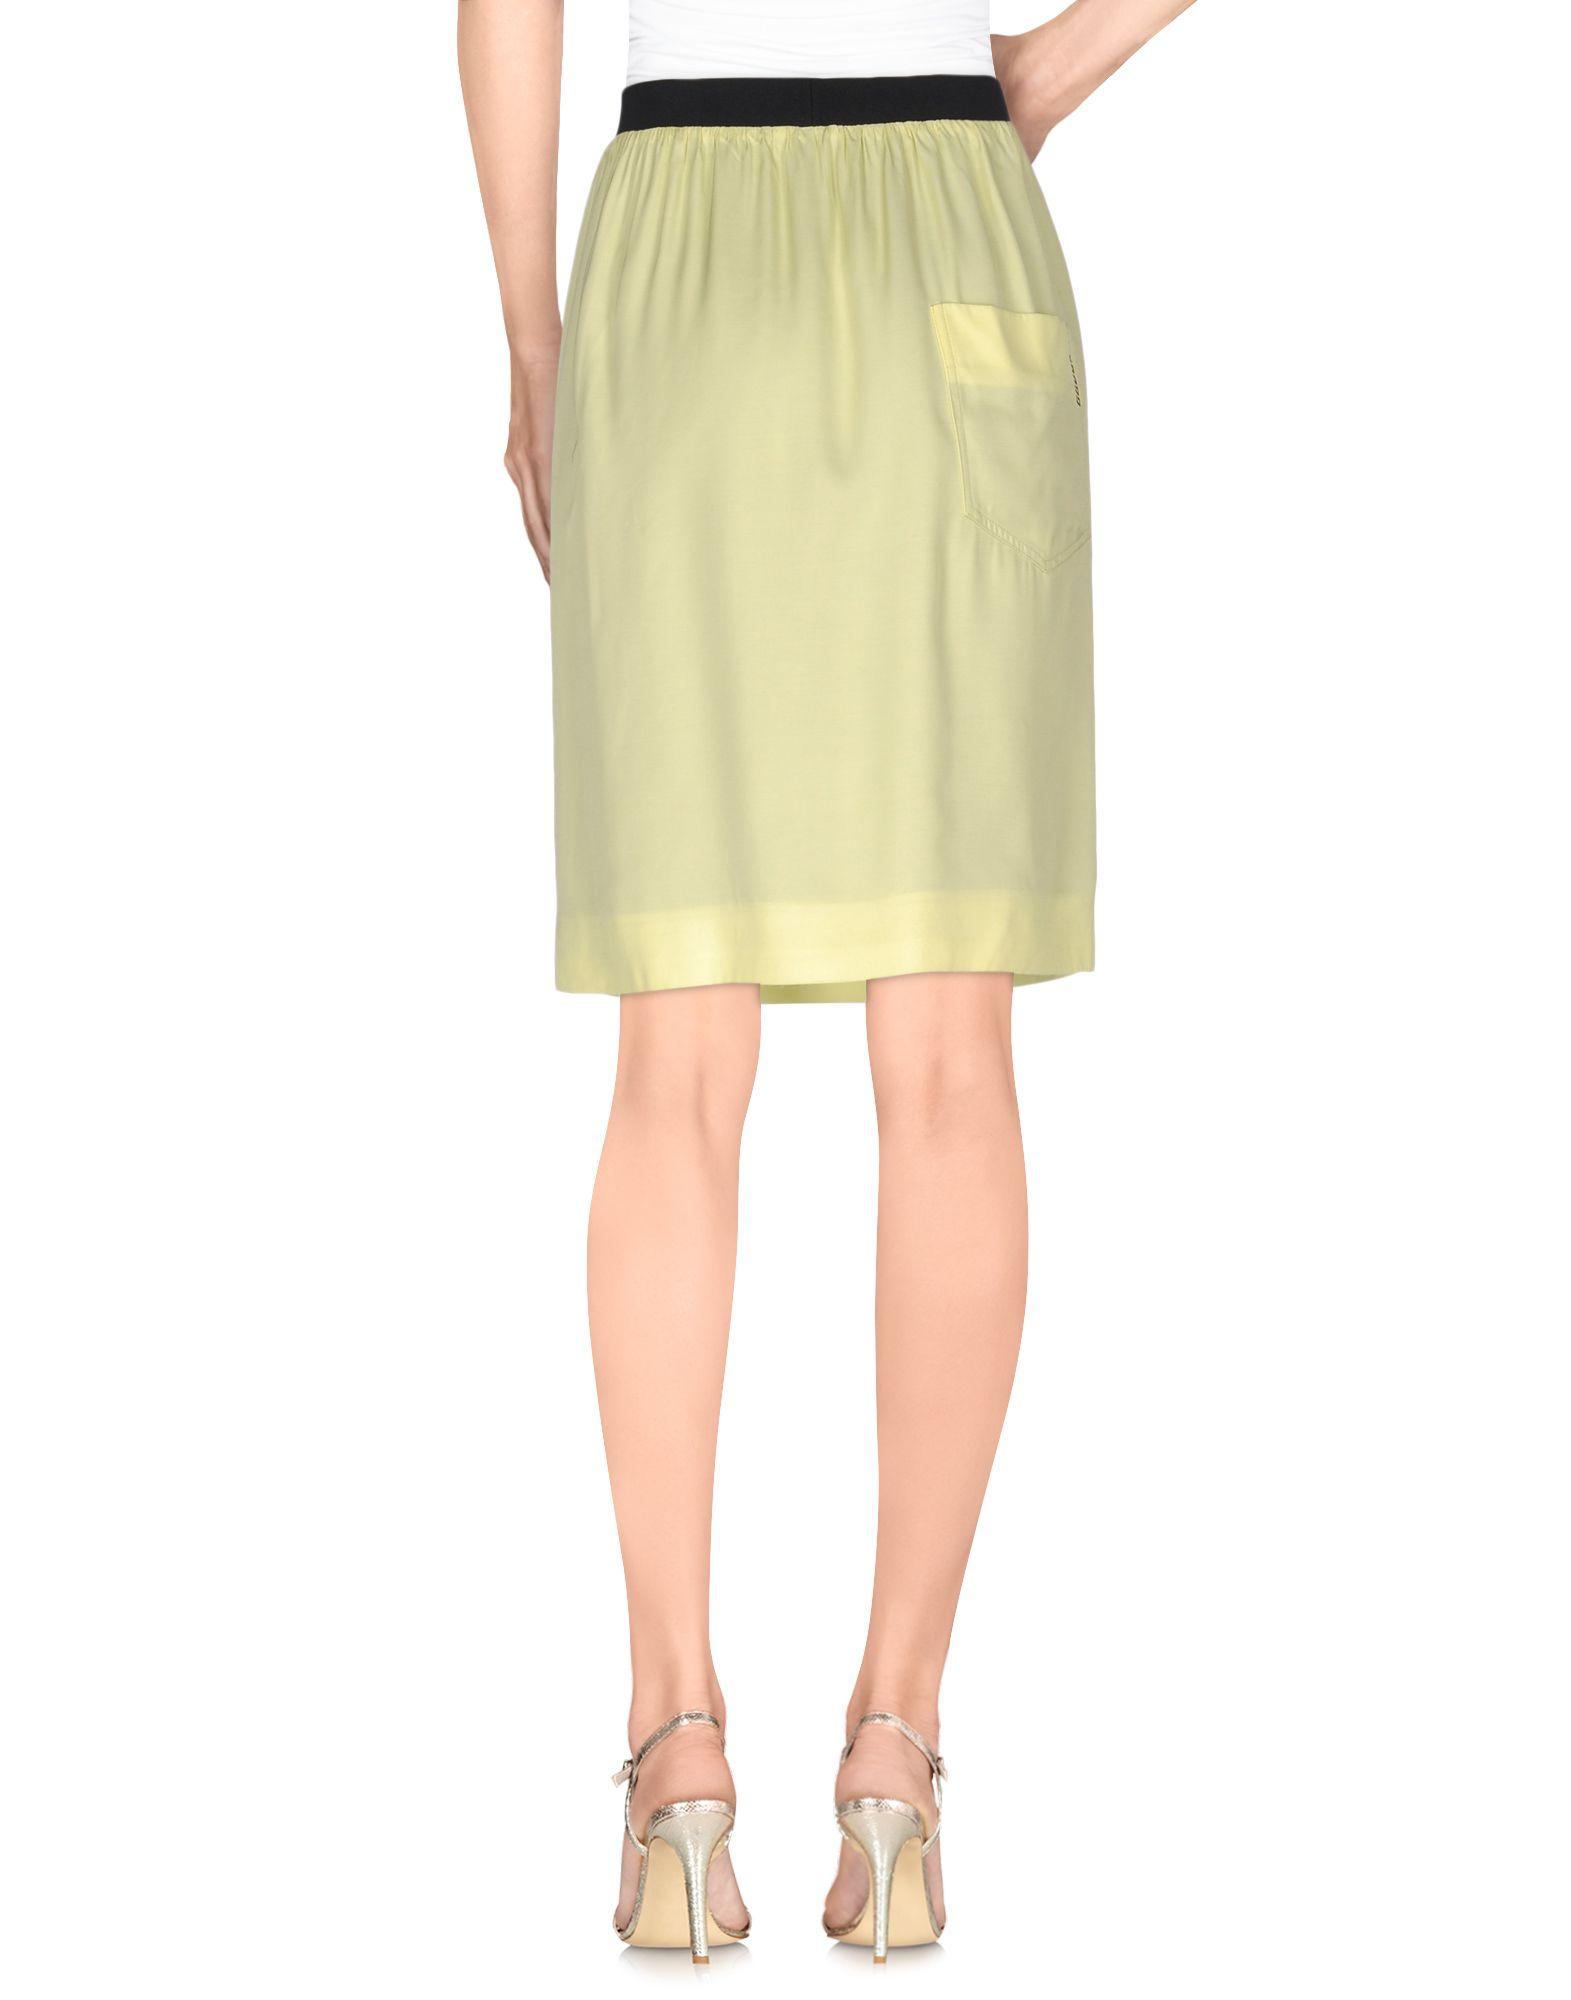 Golden Goose Deluxe Brand Knee Length Skirt in Yellow - Lyst